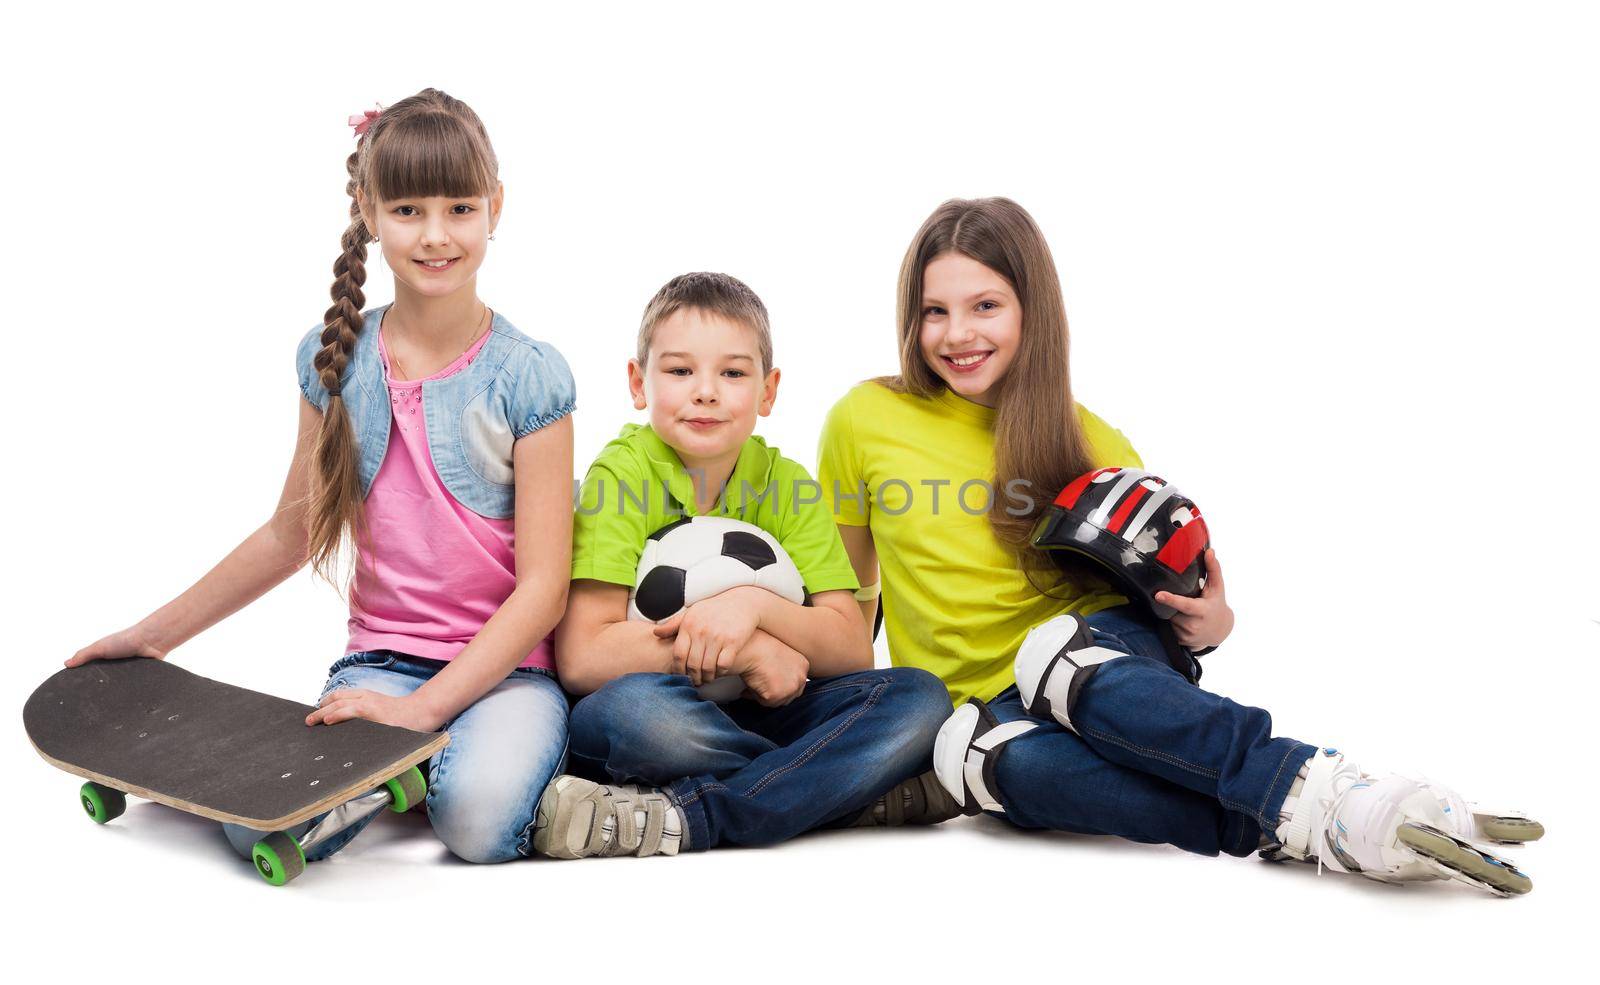 three cute children sitting on the floor with sport equipment by GekaSkr